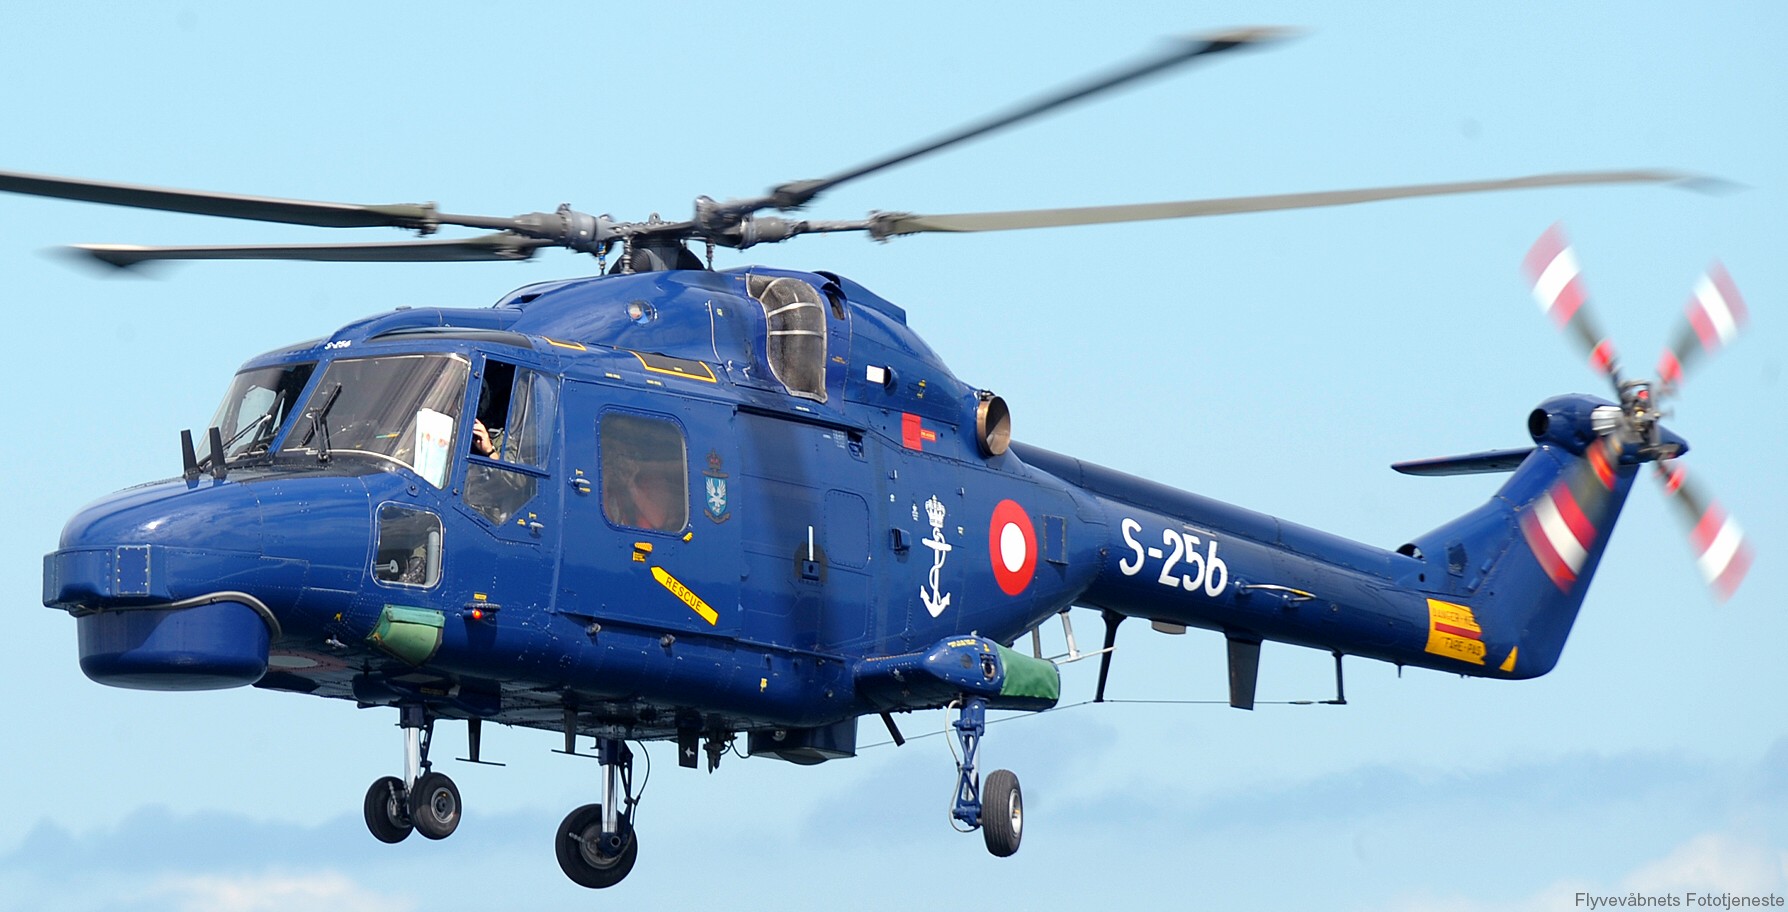 lynx mk.80 mk.90b helicopter westland royal danish navy air force kongelige danske marine flyvevabnet s-256 02